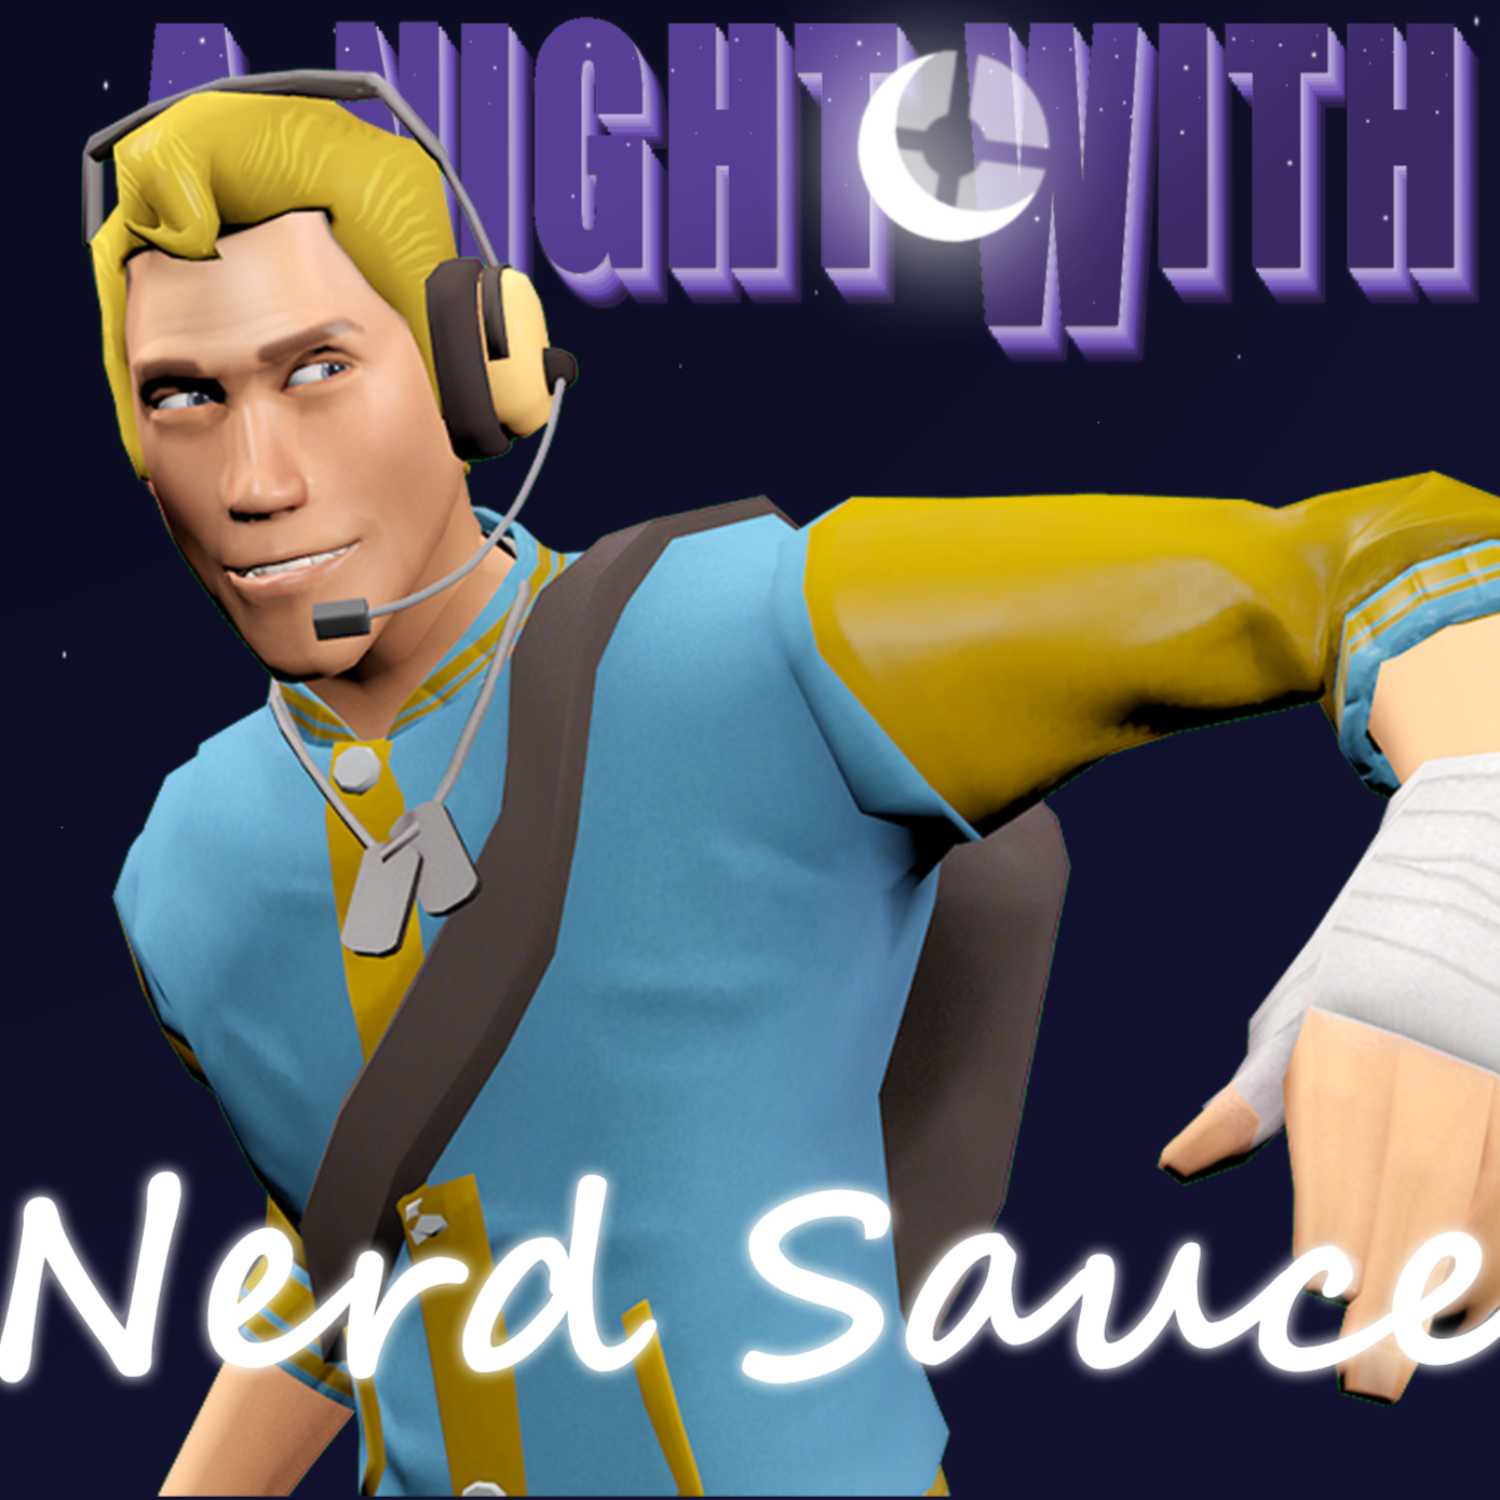 A Night With: Nerd Sauce "TF2's Boy Wonder"